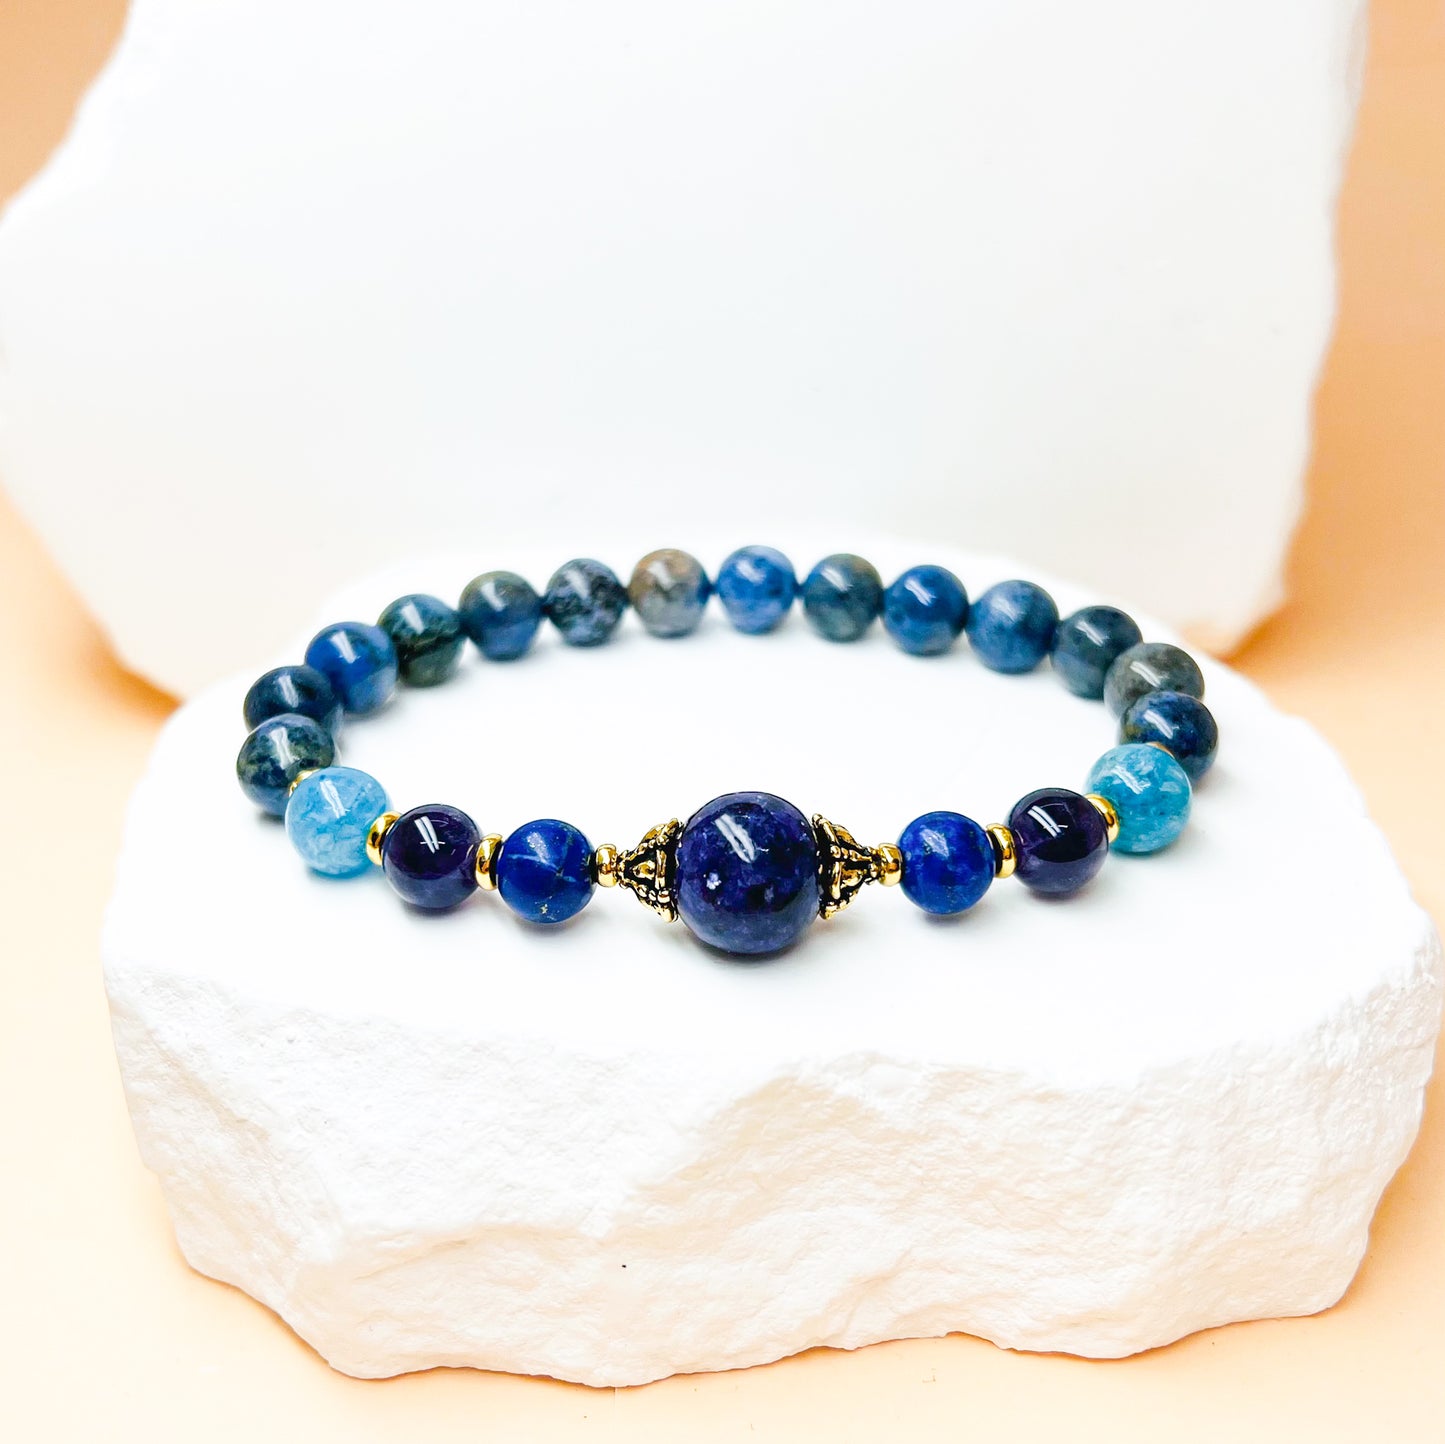 Blue dumortierite gemstone bracelet for strength